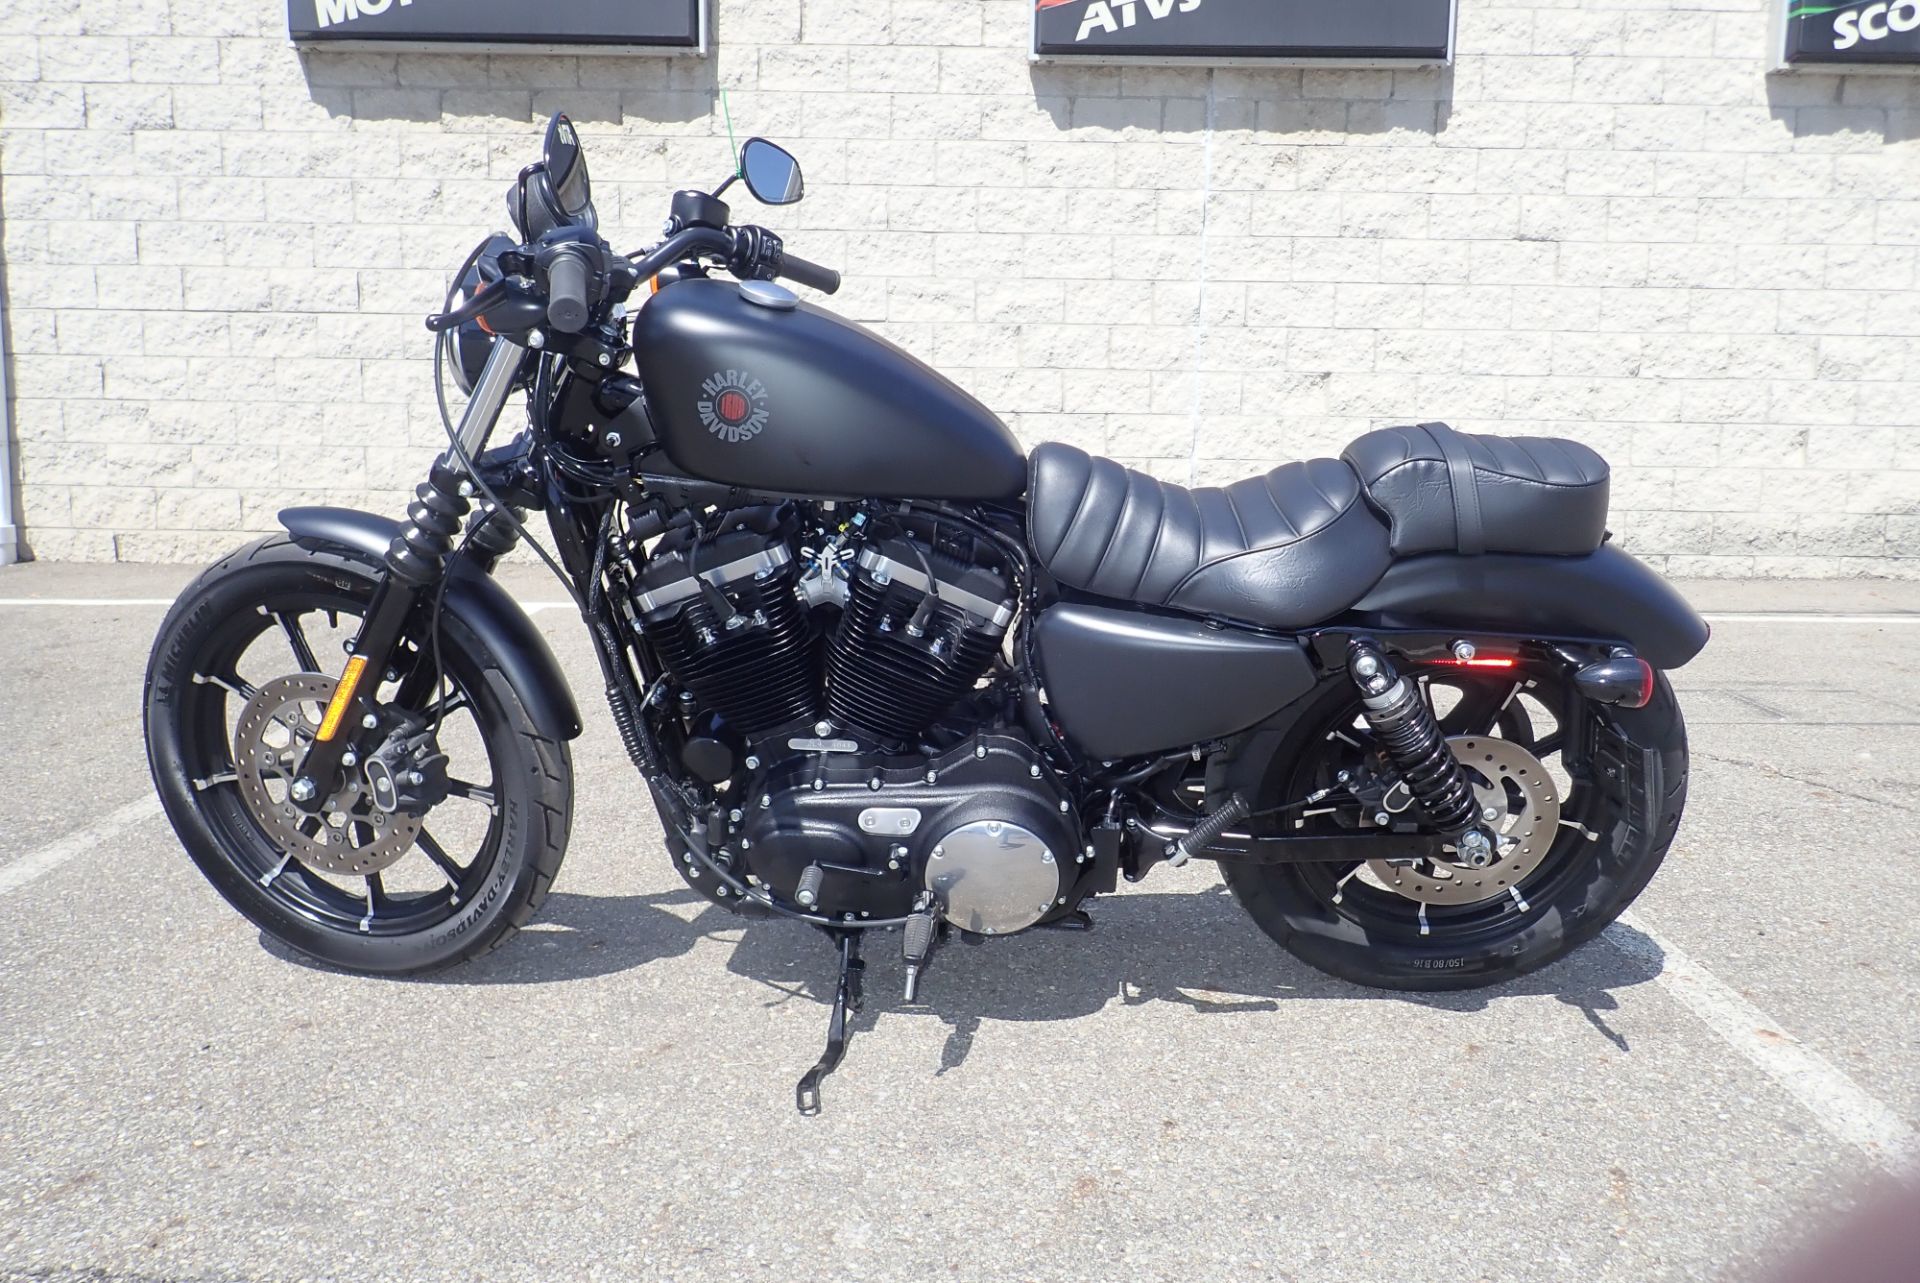 2020 Harley-Davidson Iron 883™ in Massillon, Ohio - Photo 6